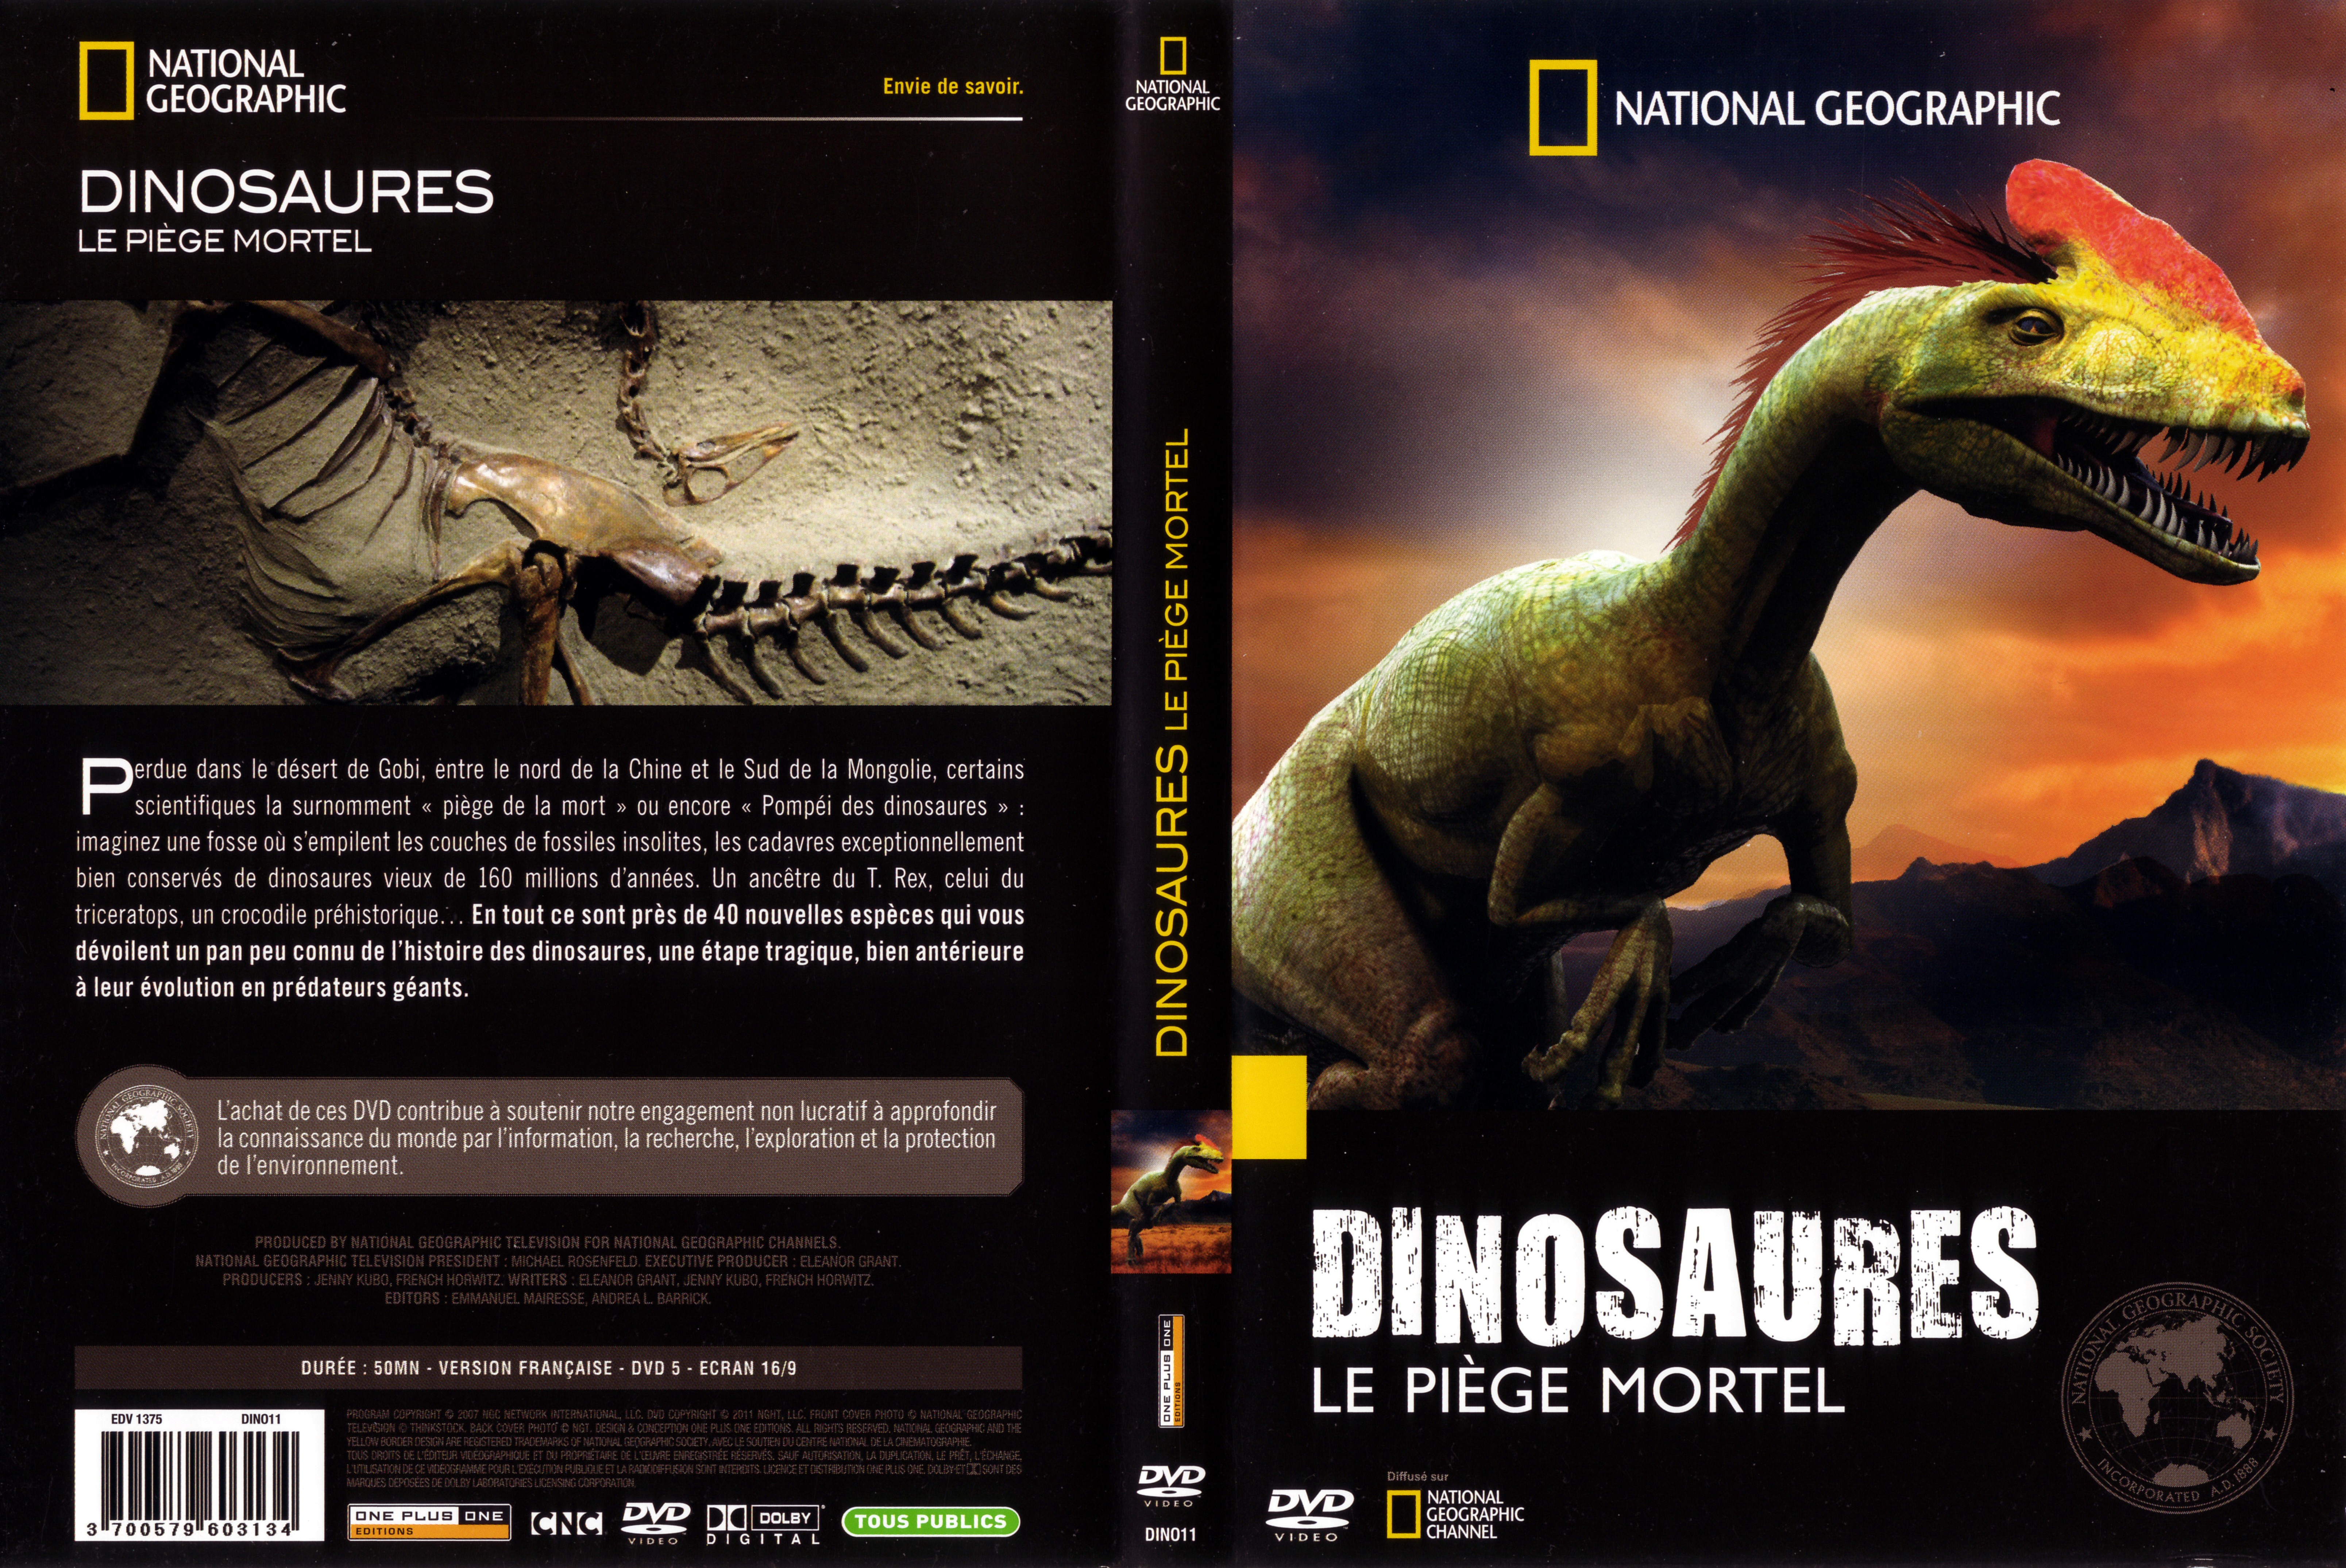 Jaquette DVD National geographic - Dinosaures Le piege mortel